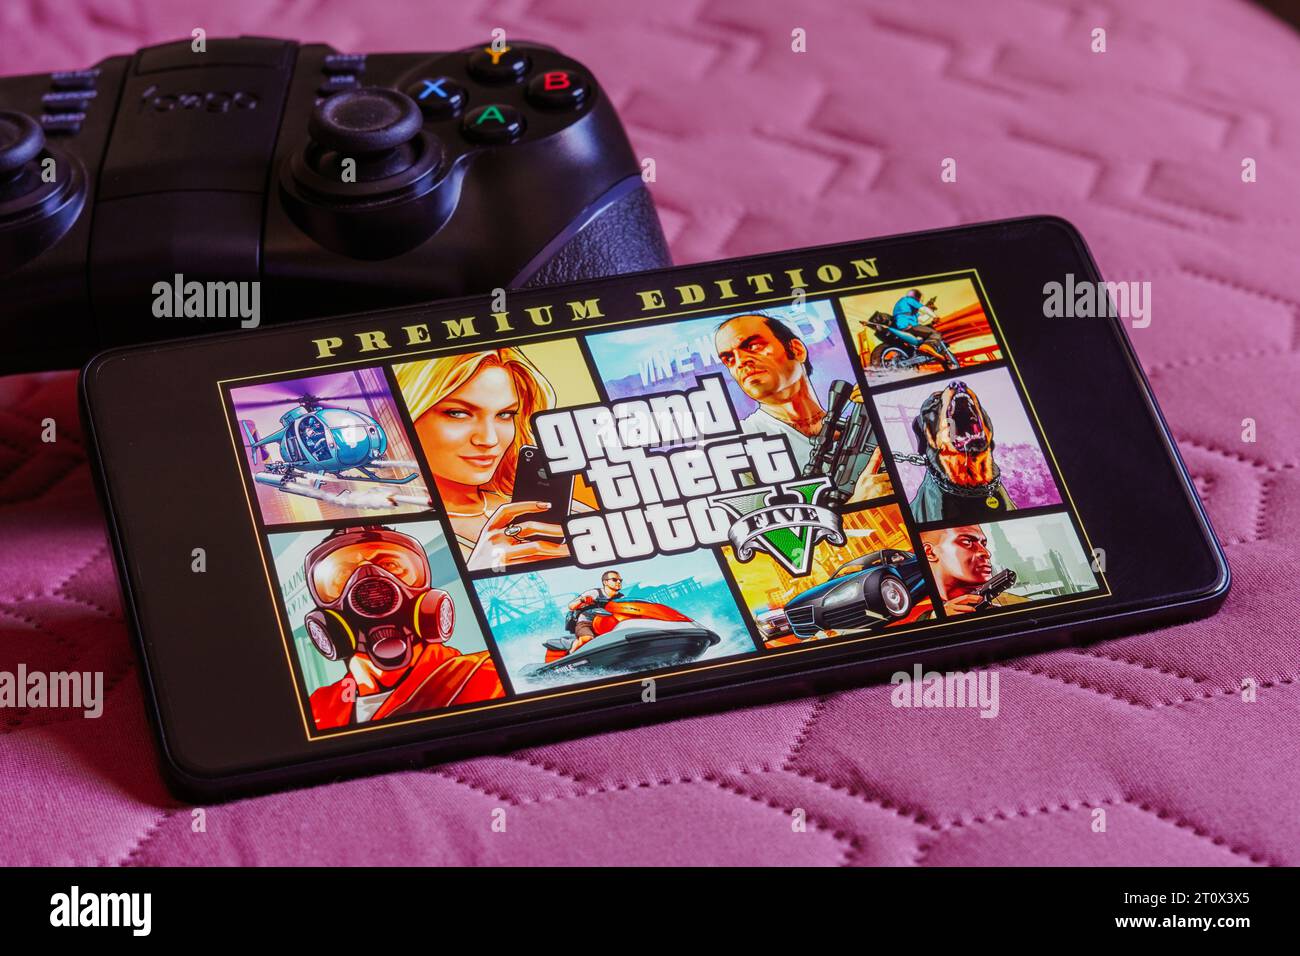 GTA5 - Grand Theft Auto Photo (32709804) - Fanpop